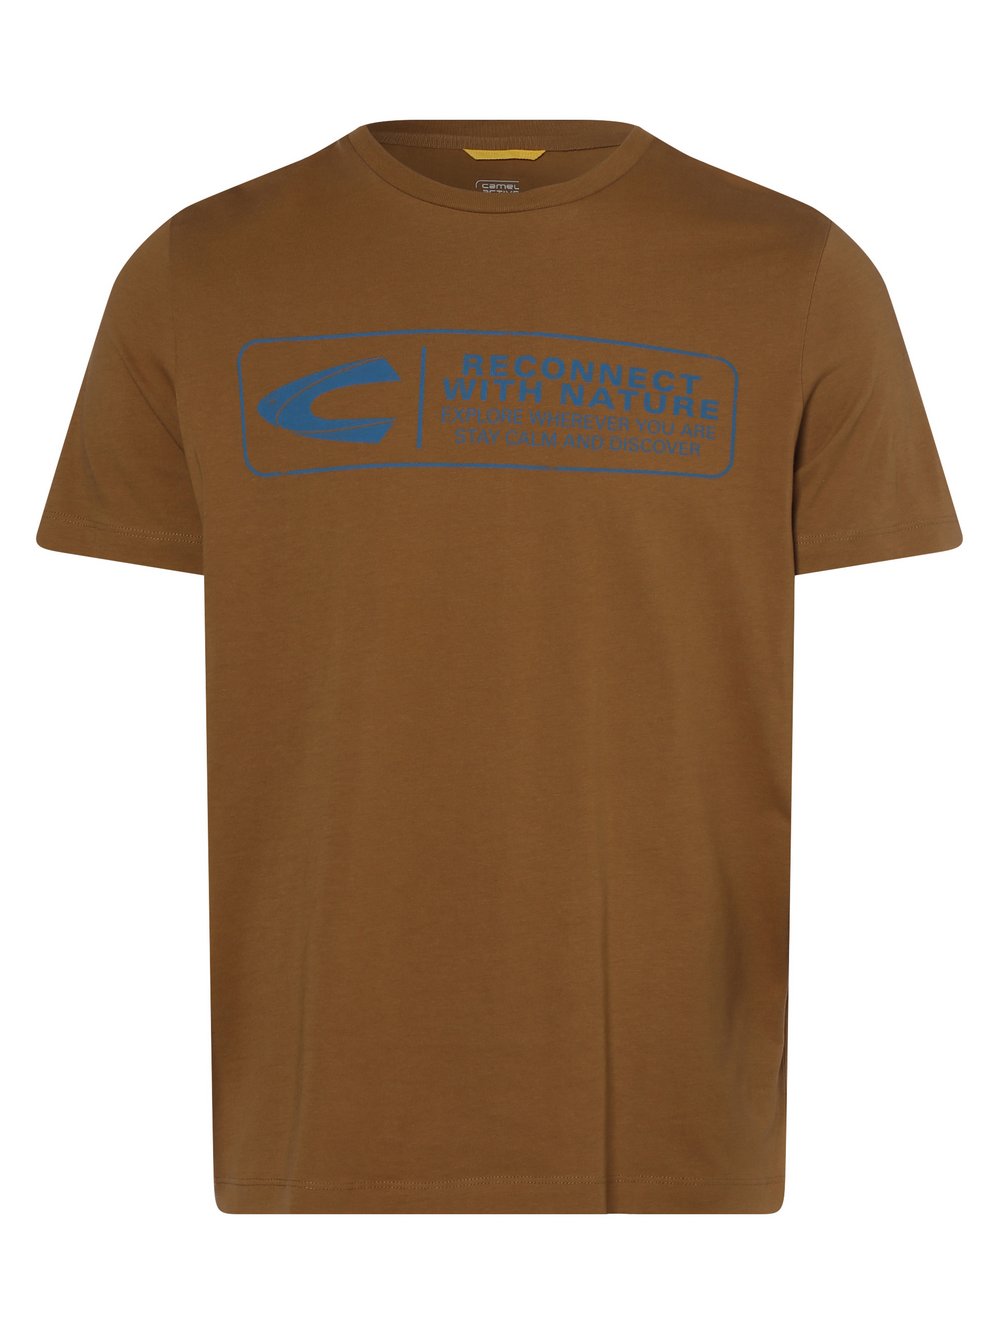 Camel Active - T-shirt męski, brązowy